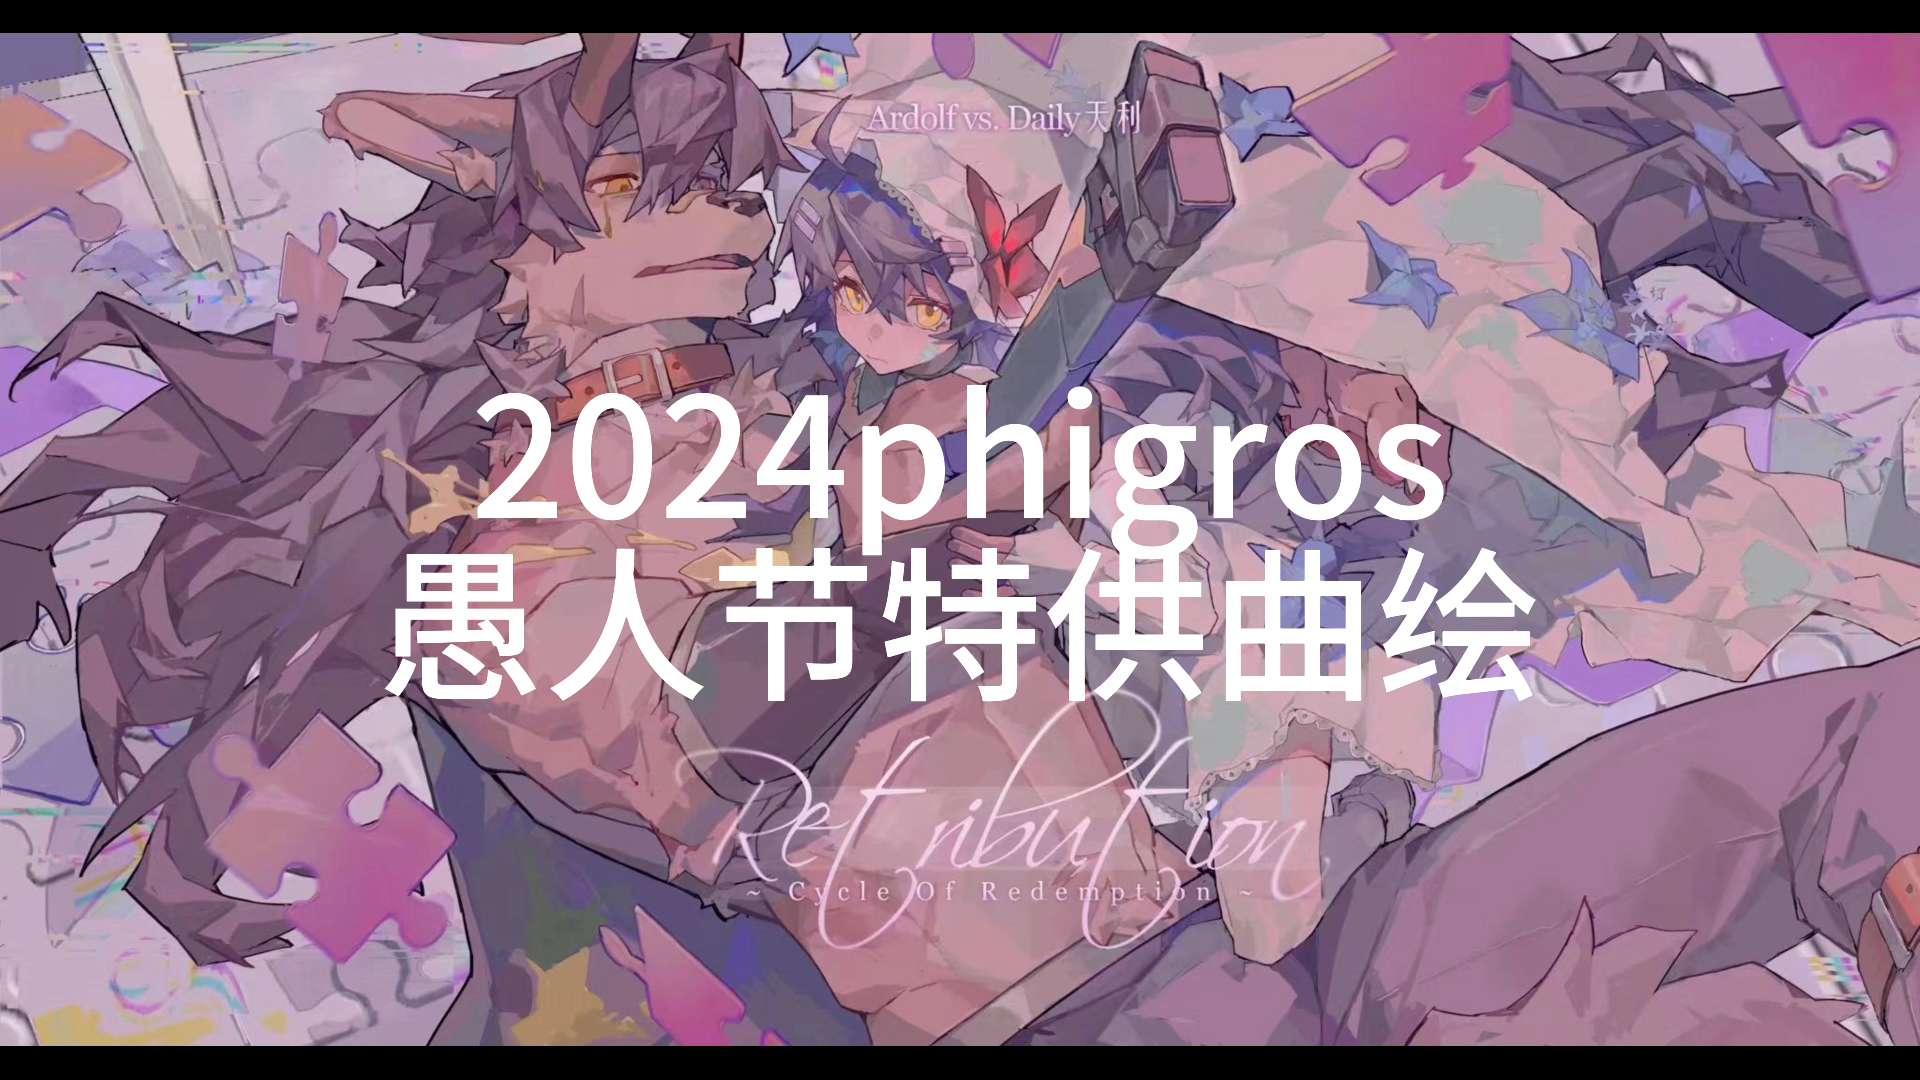 【Phigros】2024愚人节曲绘，简介自取